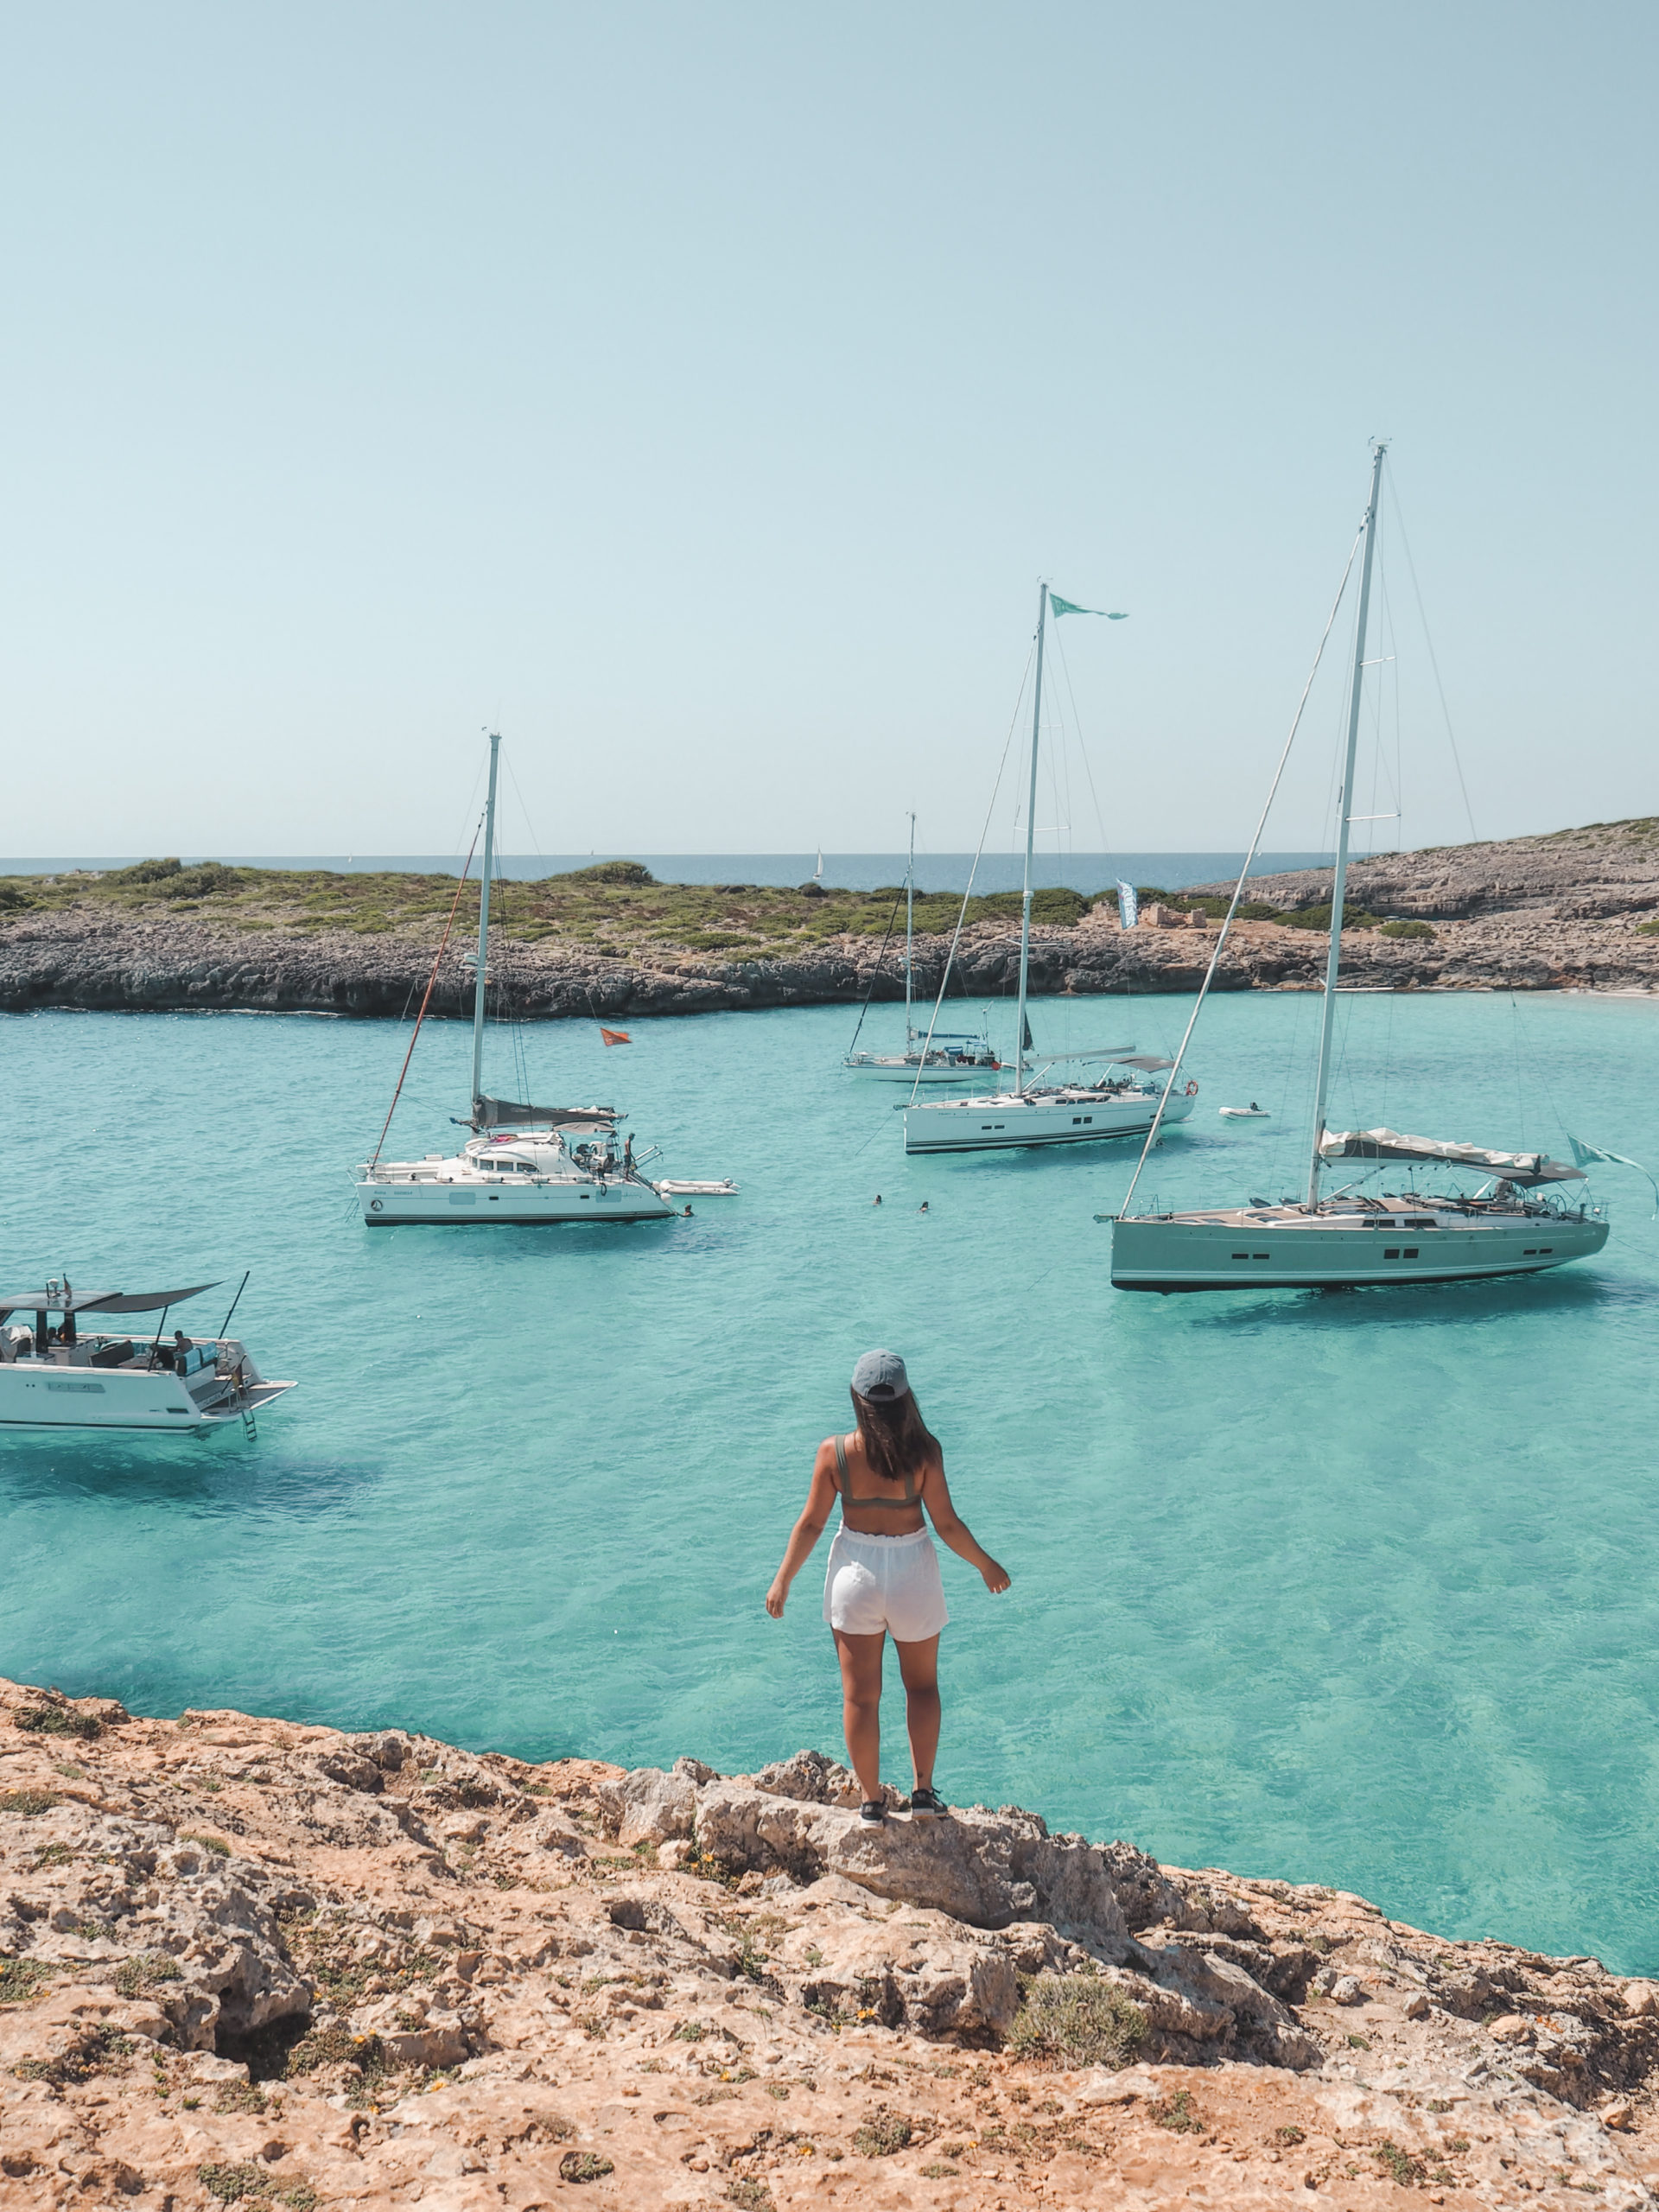 The Best Wellness Sailing Retreat In Mallorca | lifestyletraveler.co | IG: @lifestyletraveler.co